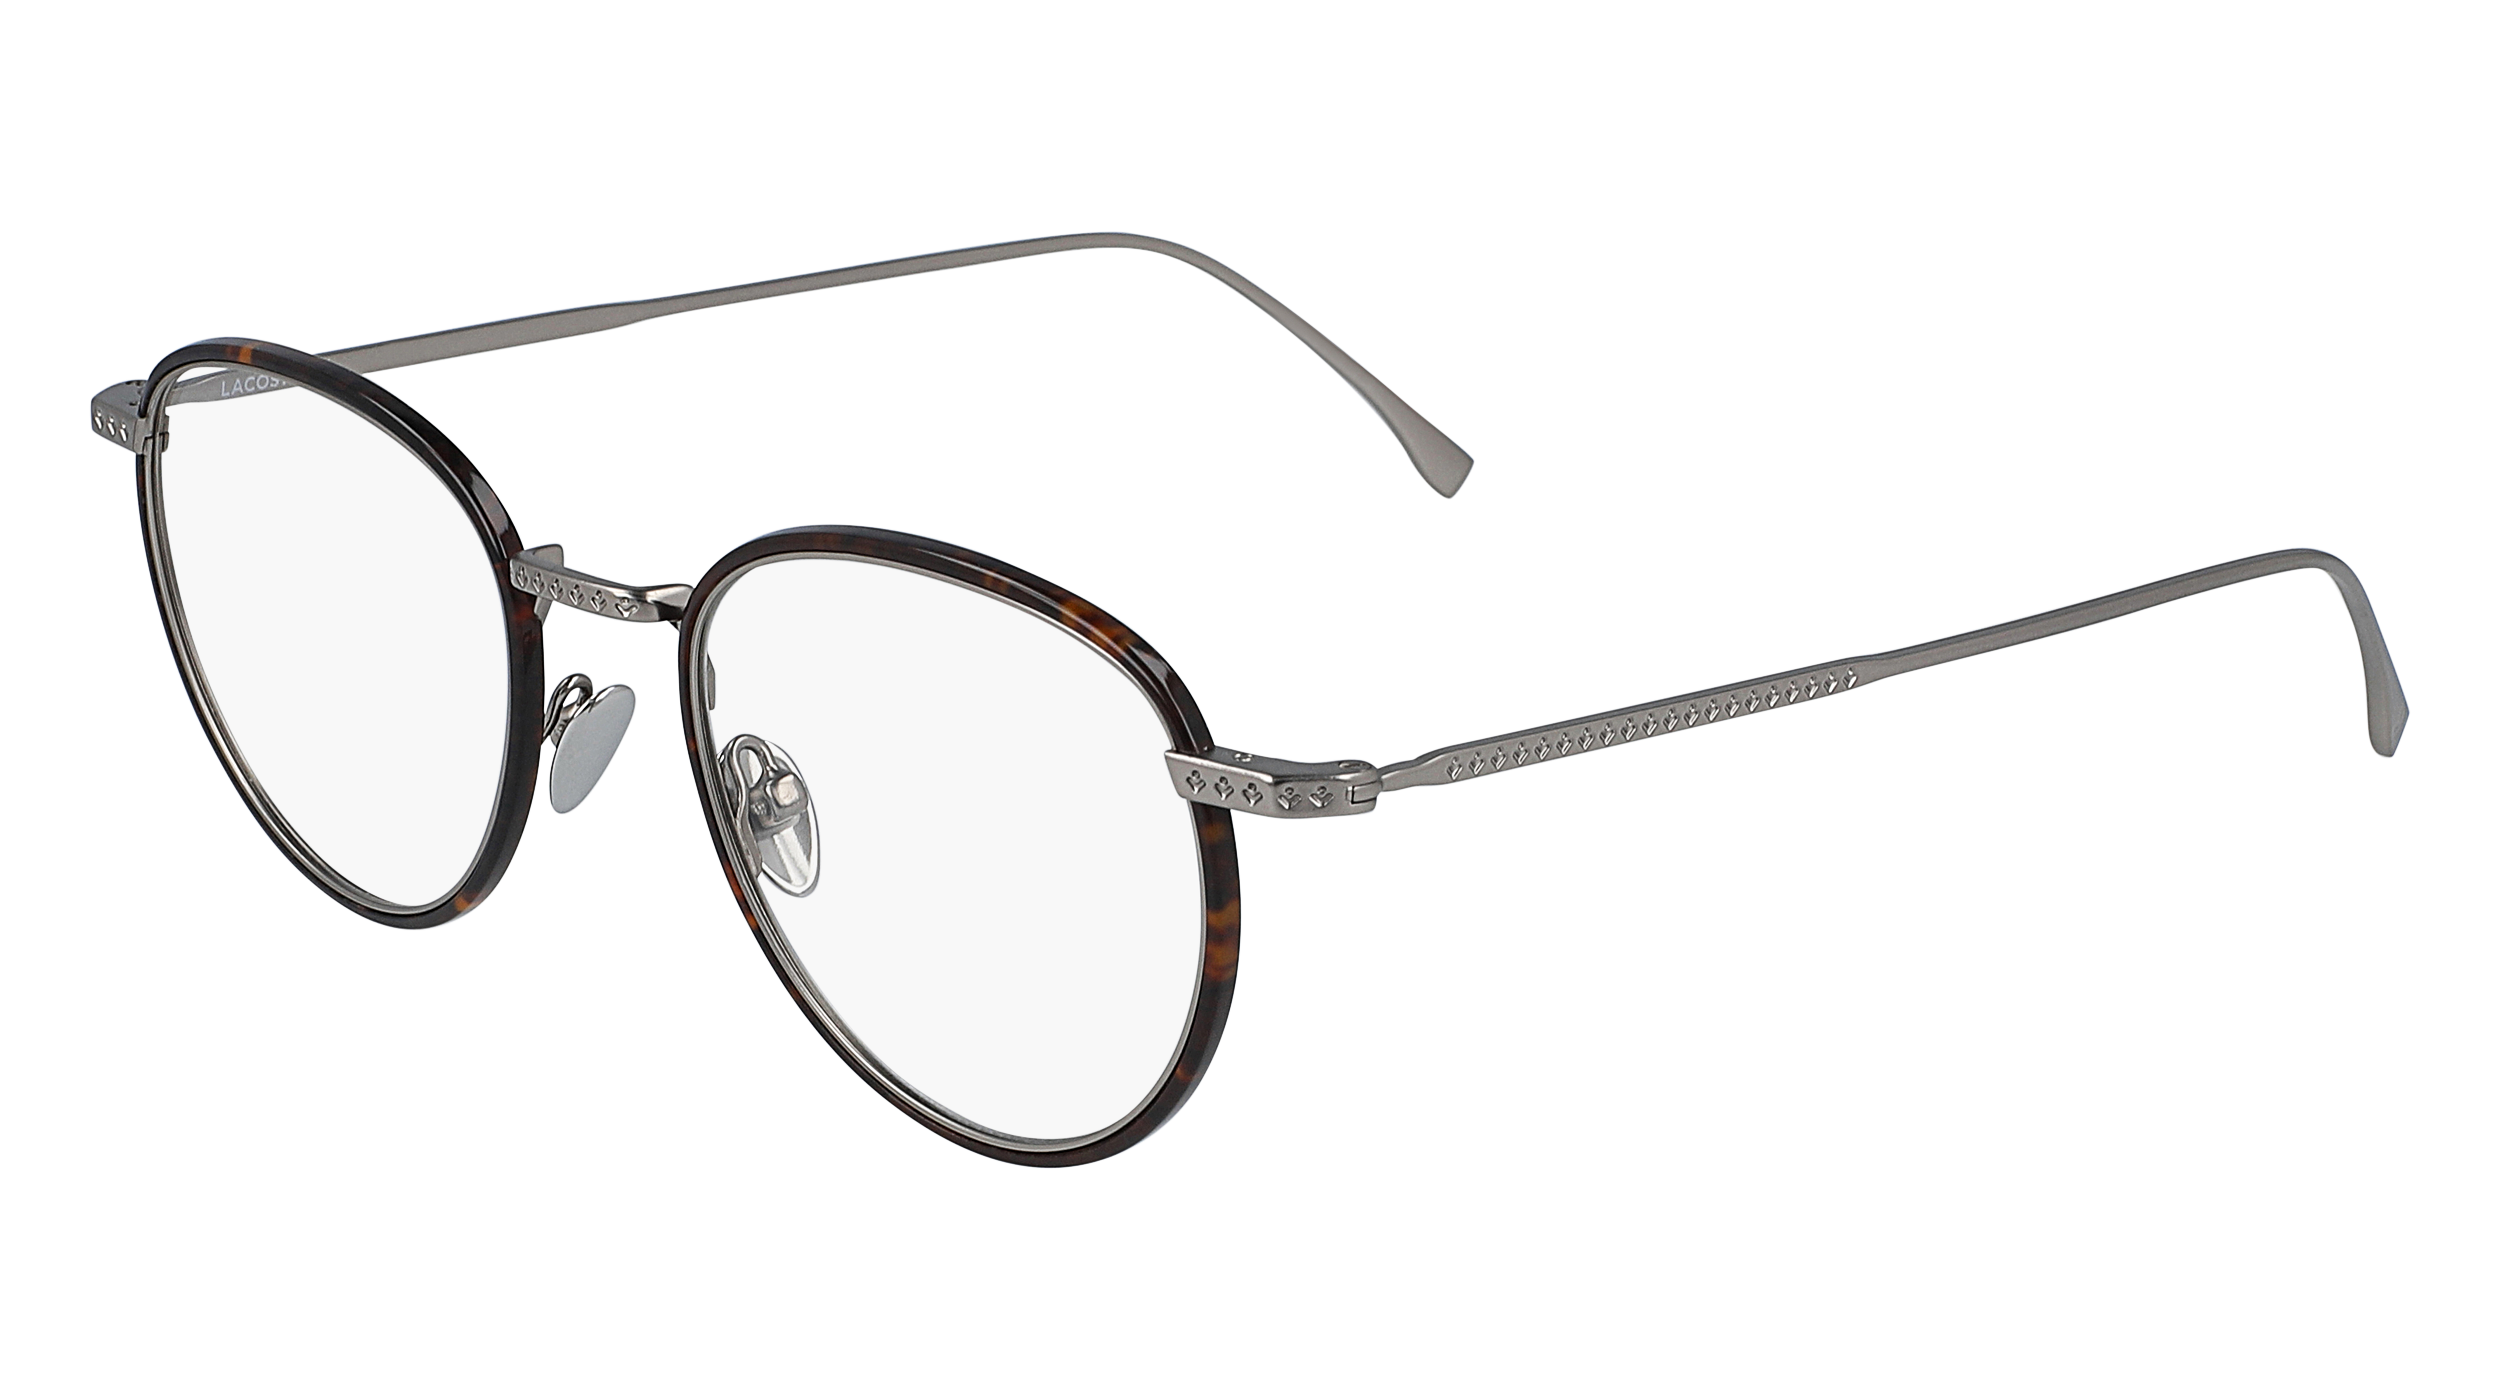 Lacoste Tart Rim And Metallic Temple Frame Eyeglasses By G&M Eyecare